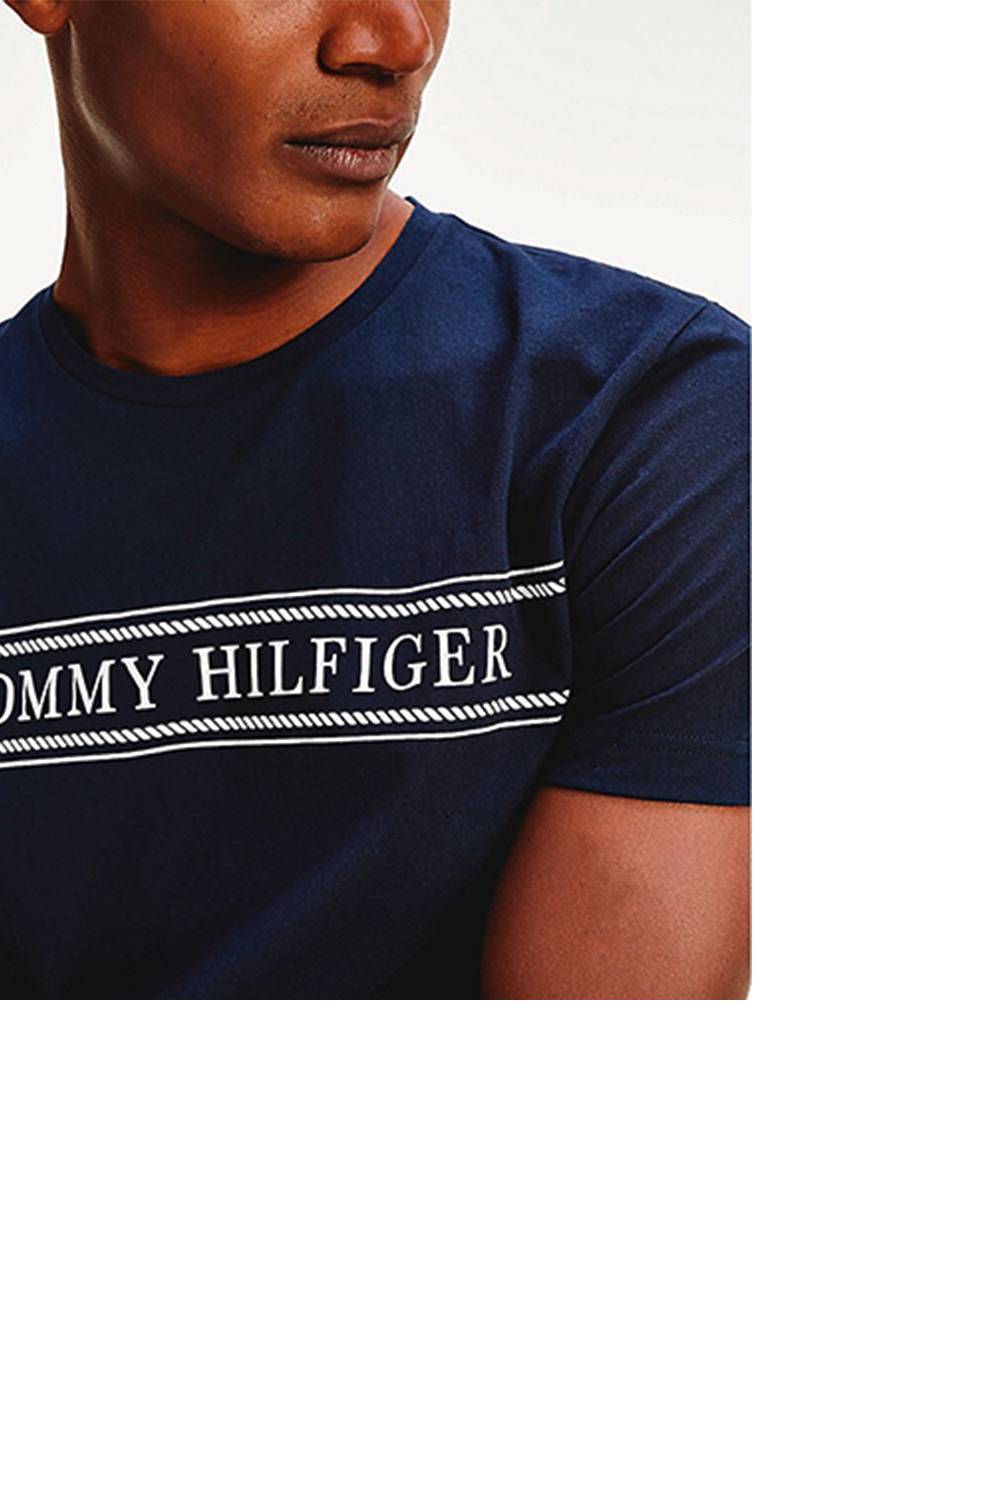 TOMMY HILFIGER - Polera Hombre